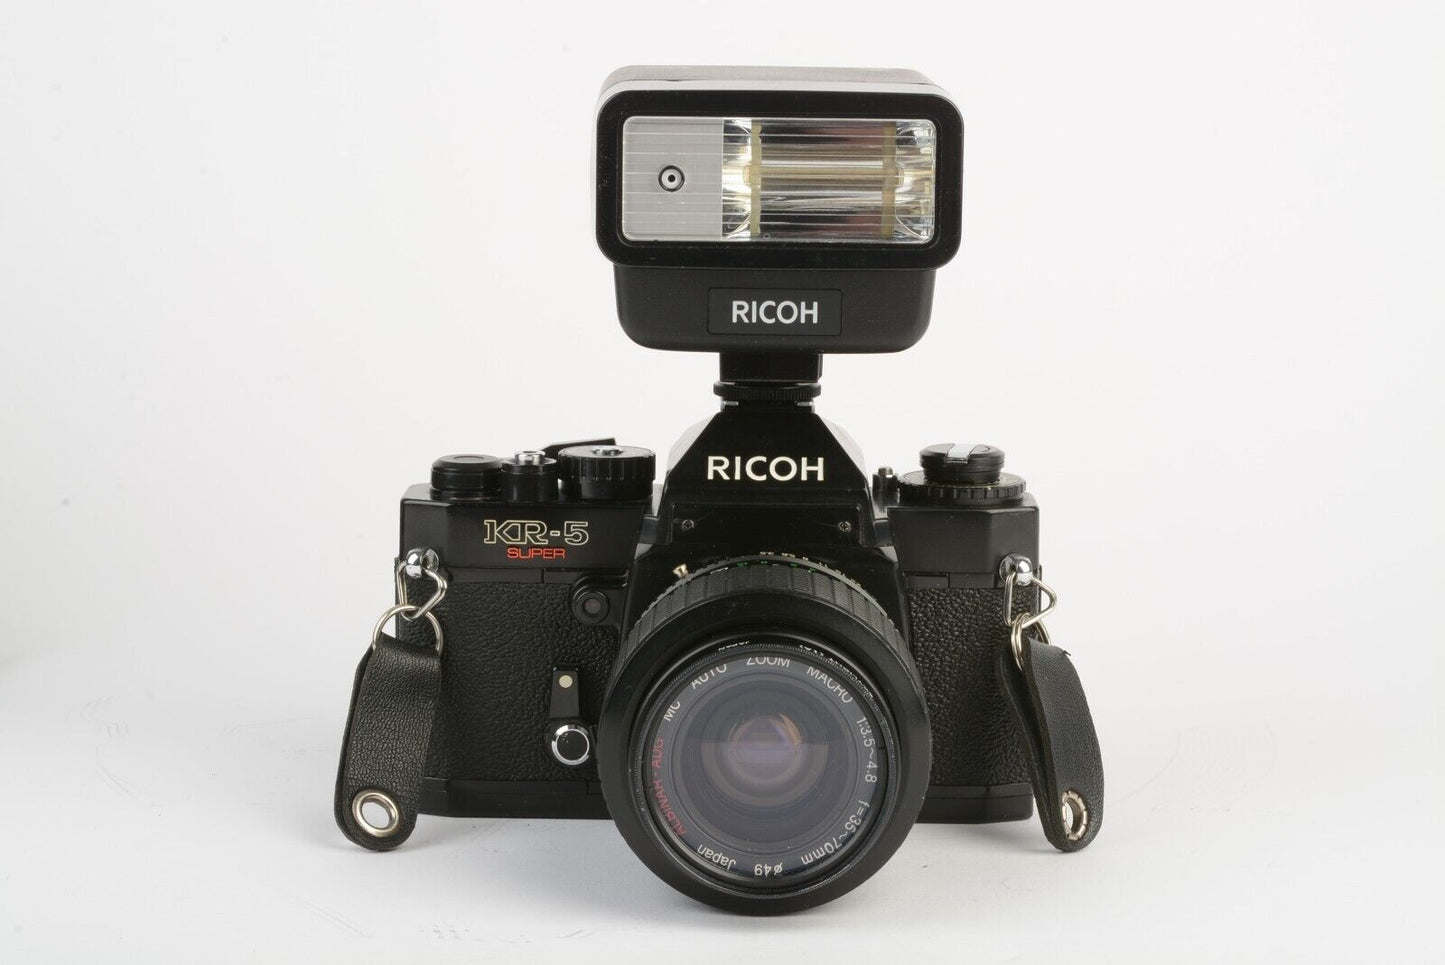 EXC++ RICOH KR-5 SUPER 35mm SLR w/ALBINAR 35-70mm ZOOM, FLASH, CASE, NEW SEALS